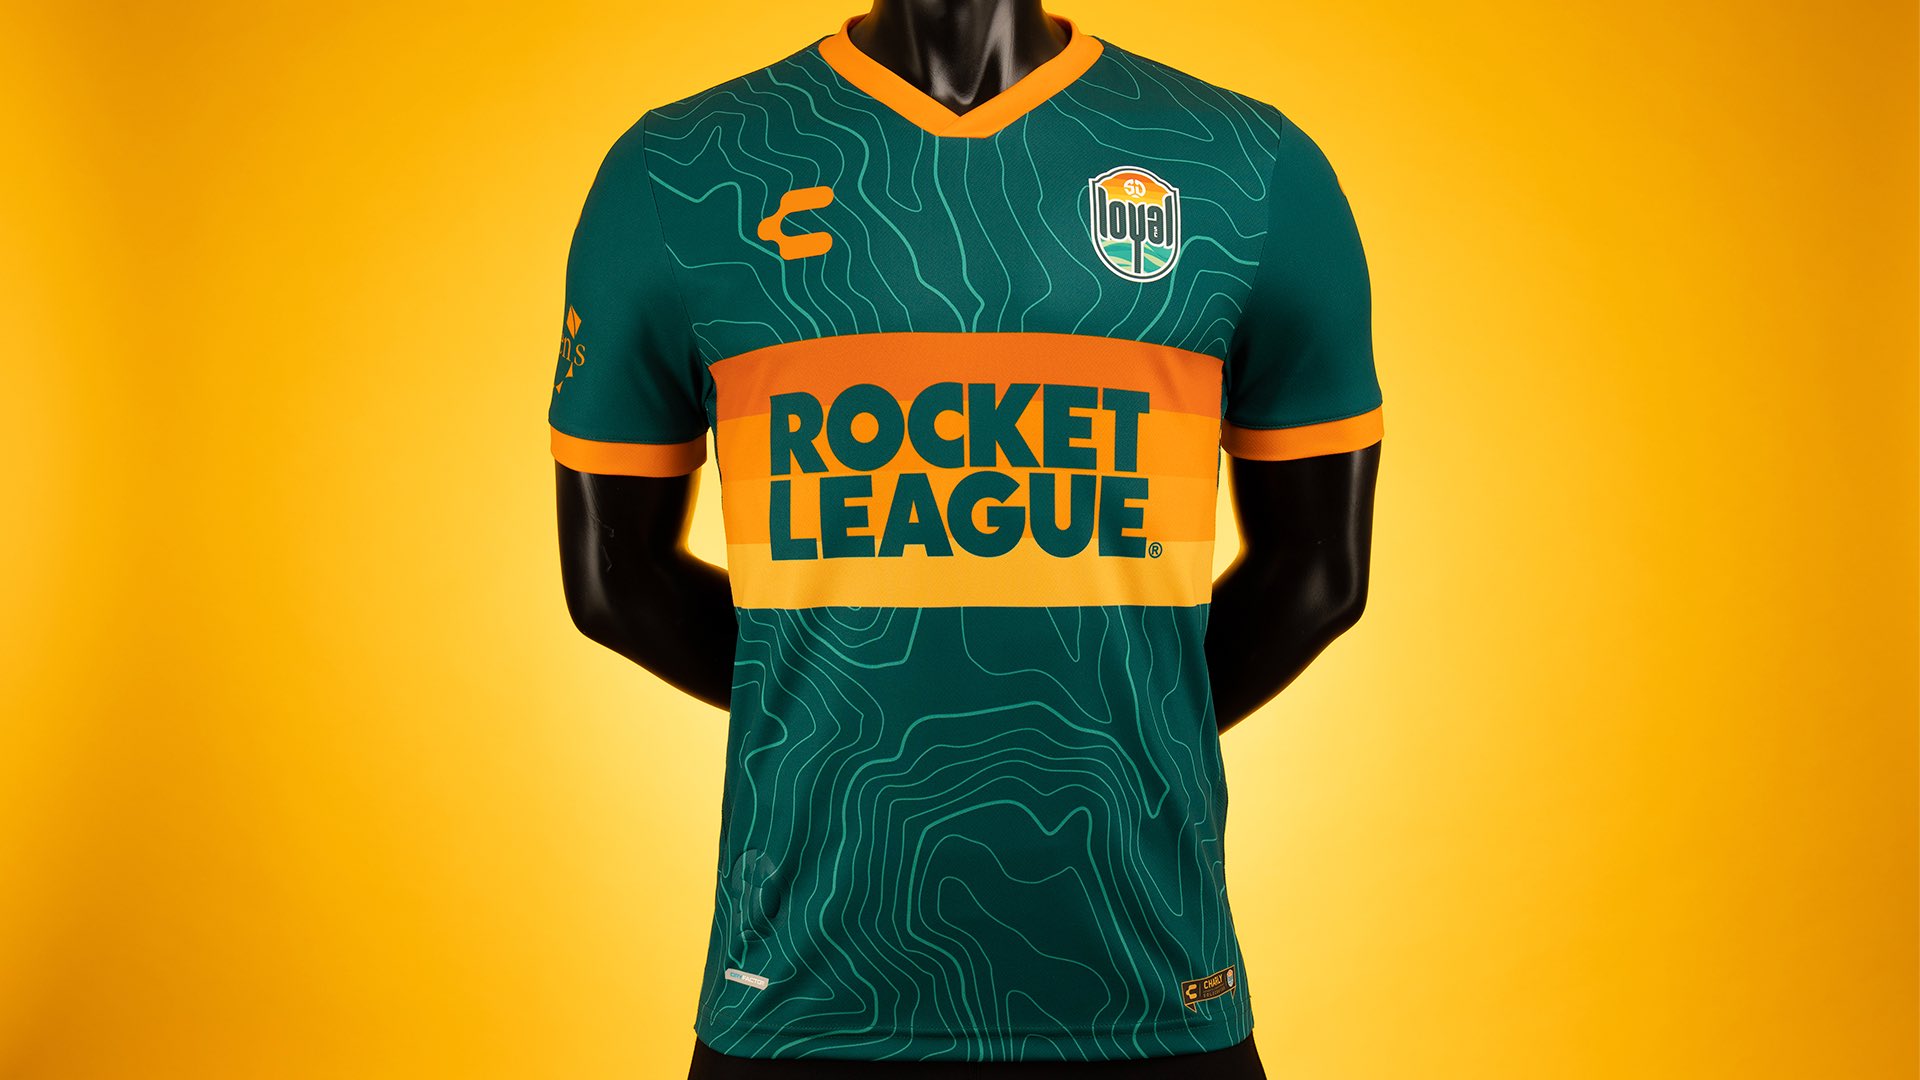 Rocket League on X: These @SanDiegoLoyal Kits 🔥